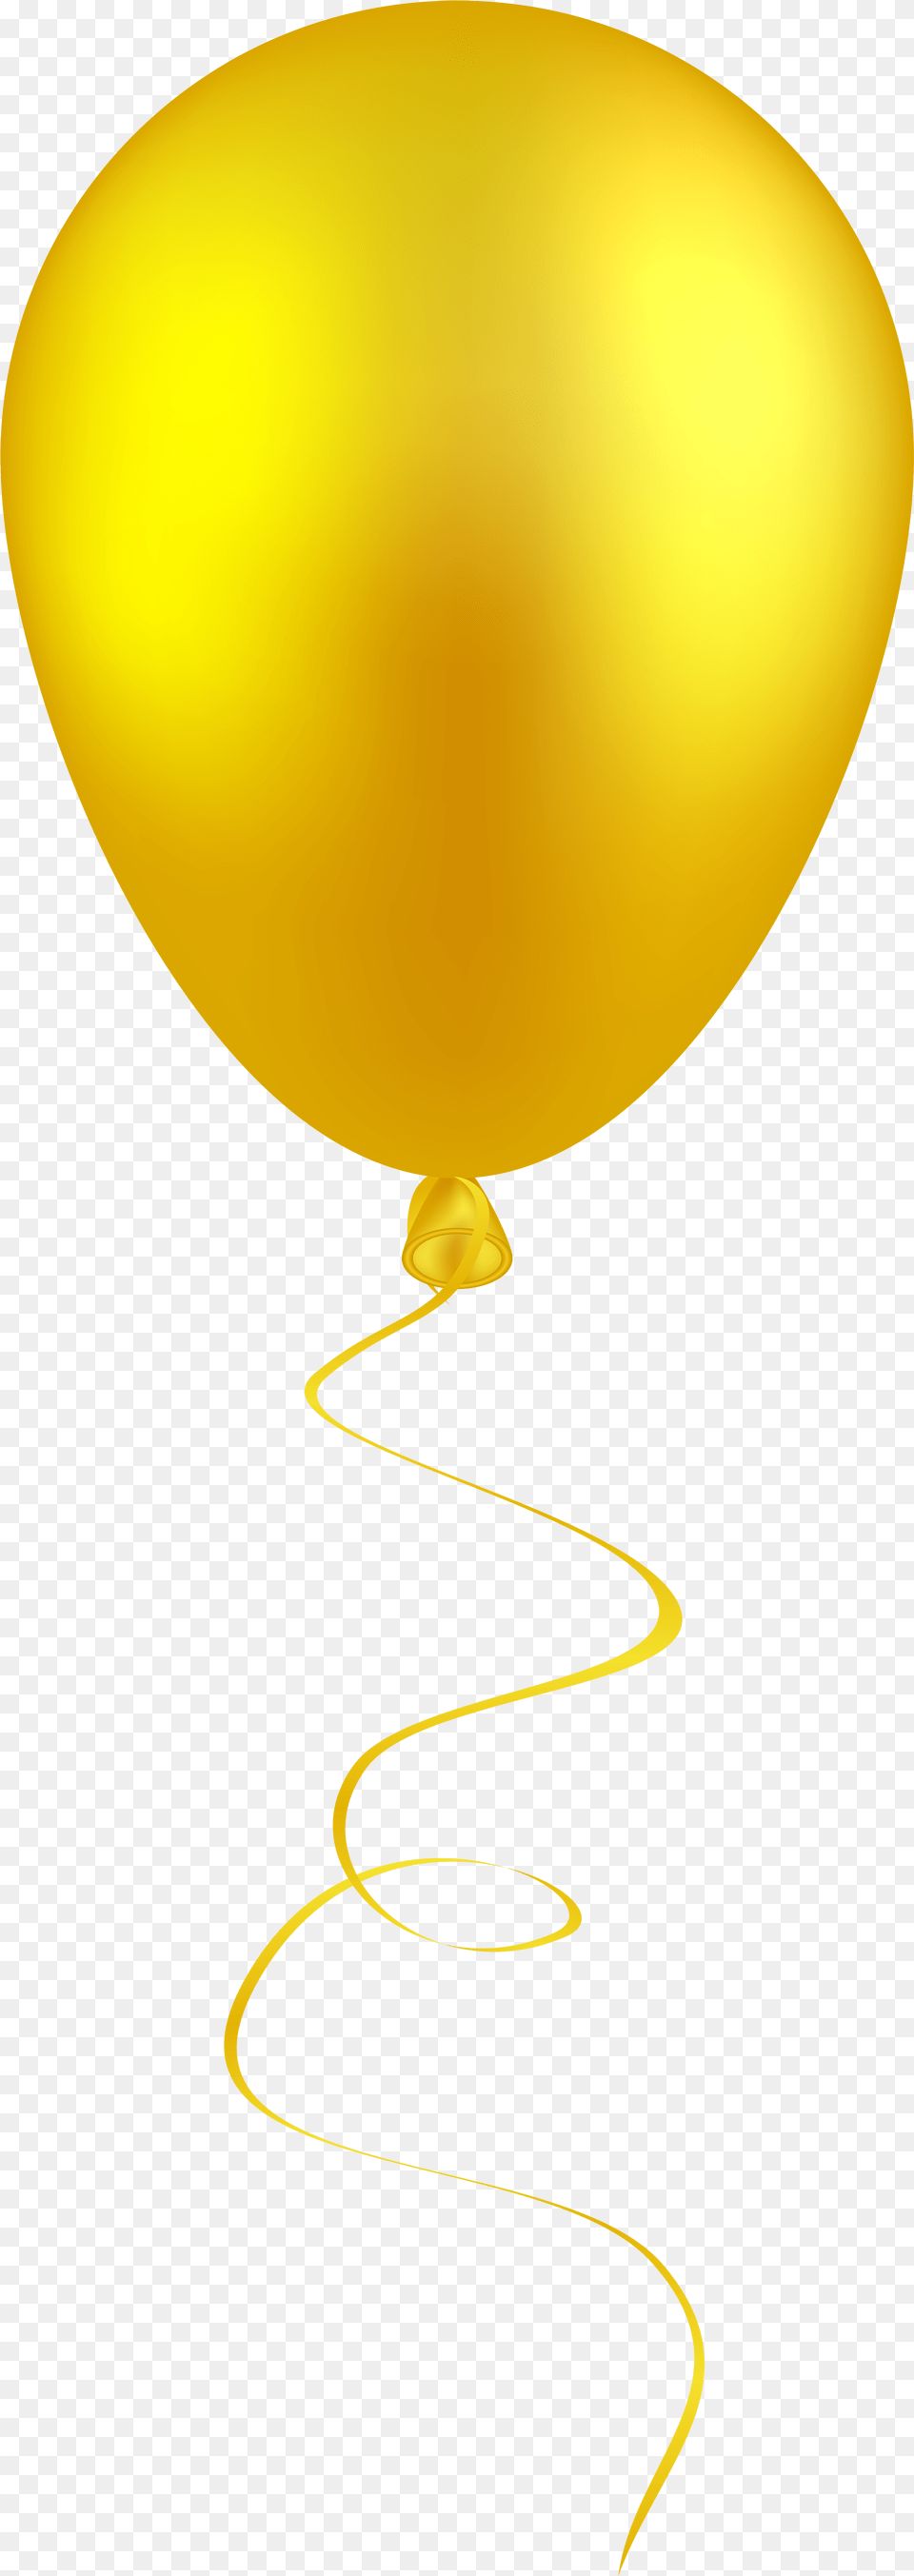 Gold Balloons, Balloon, Lighting, Astronomy, Moon Png Image